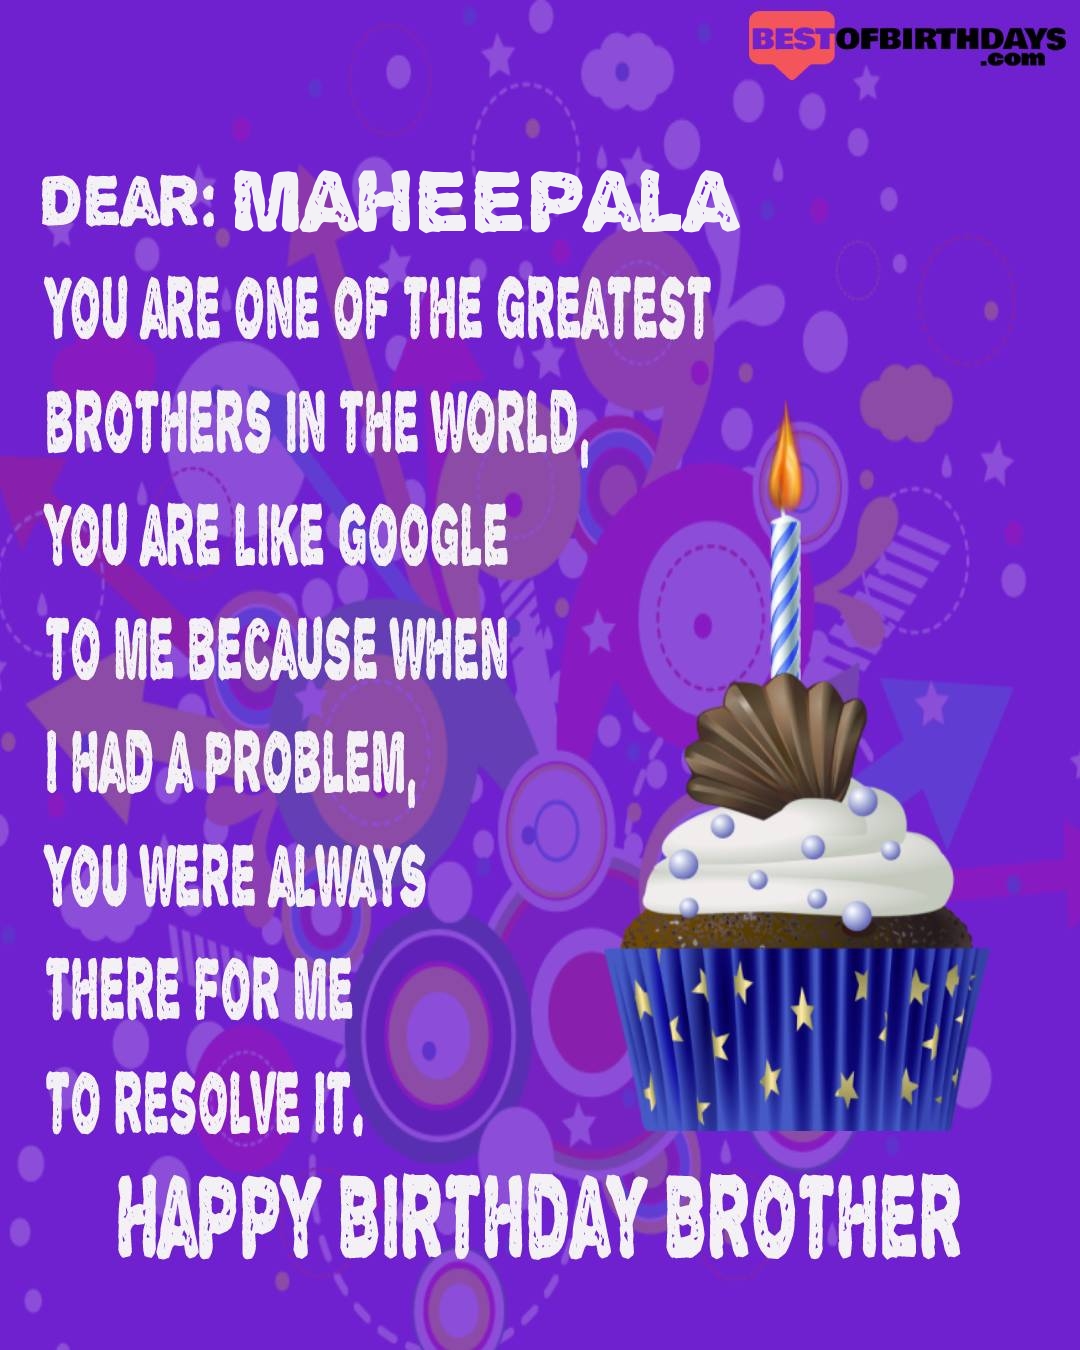 Happy birthday maheepala bhai brother bro